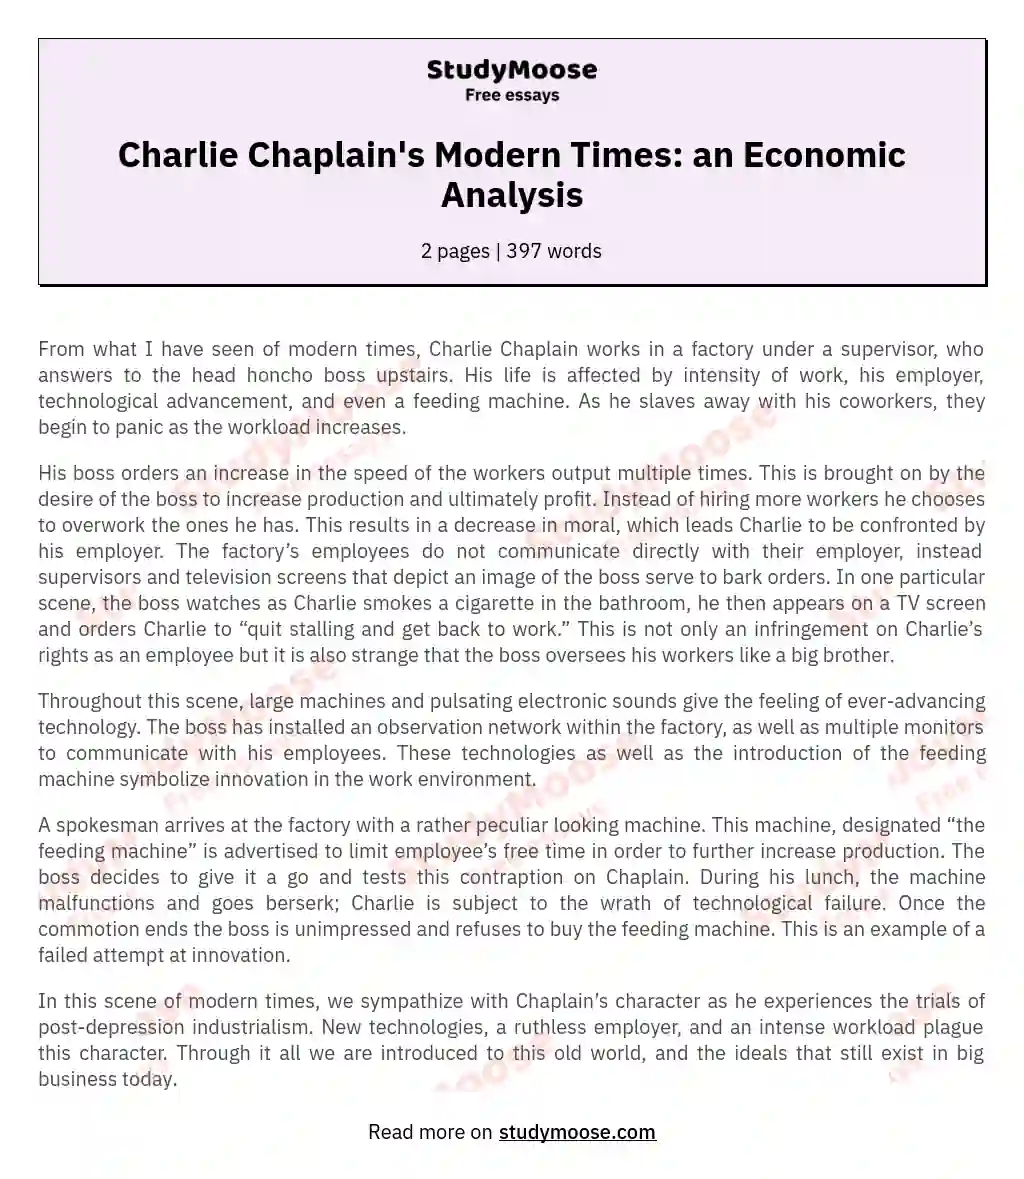 Charlie Chaplain's Modern Times: an Economic Analysis essay